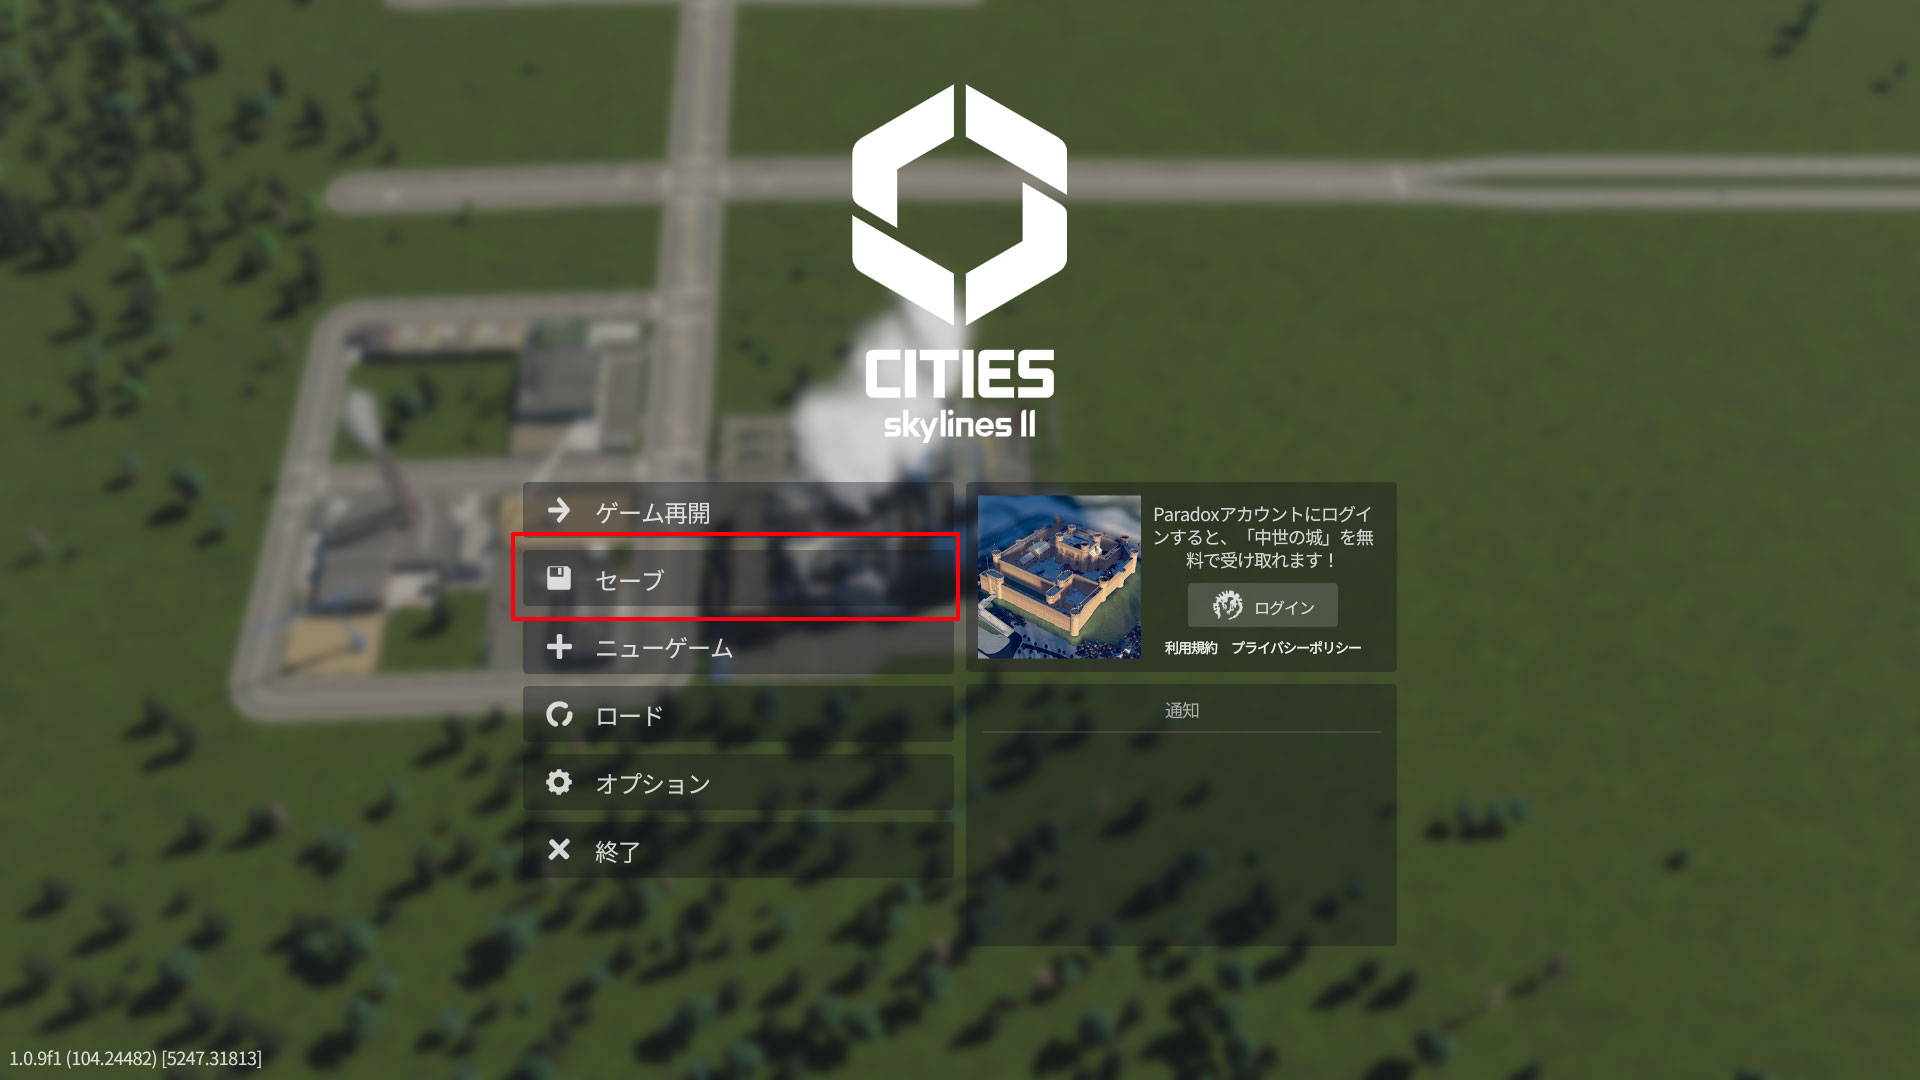 Cities_CSII-0112